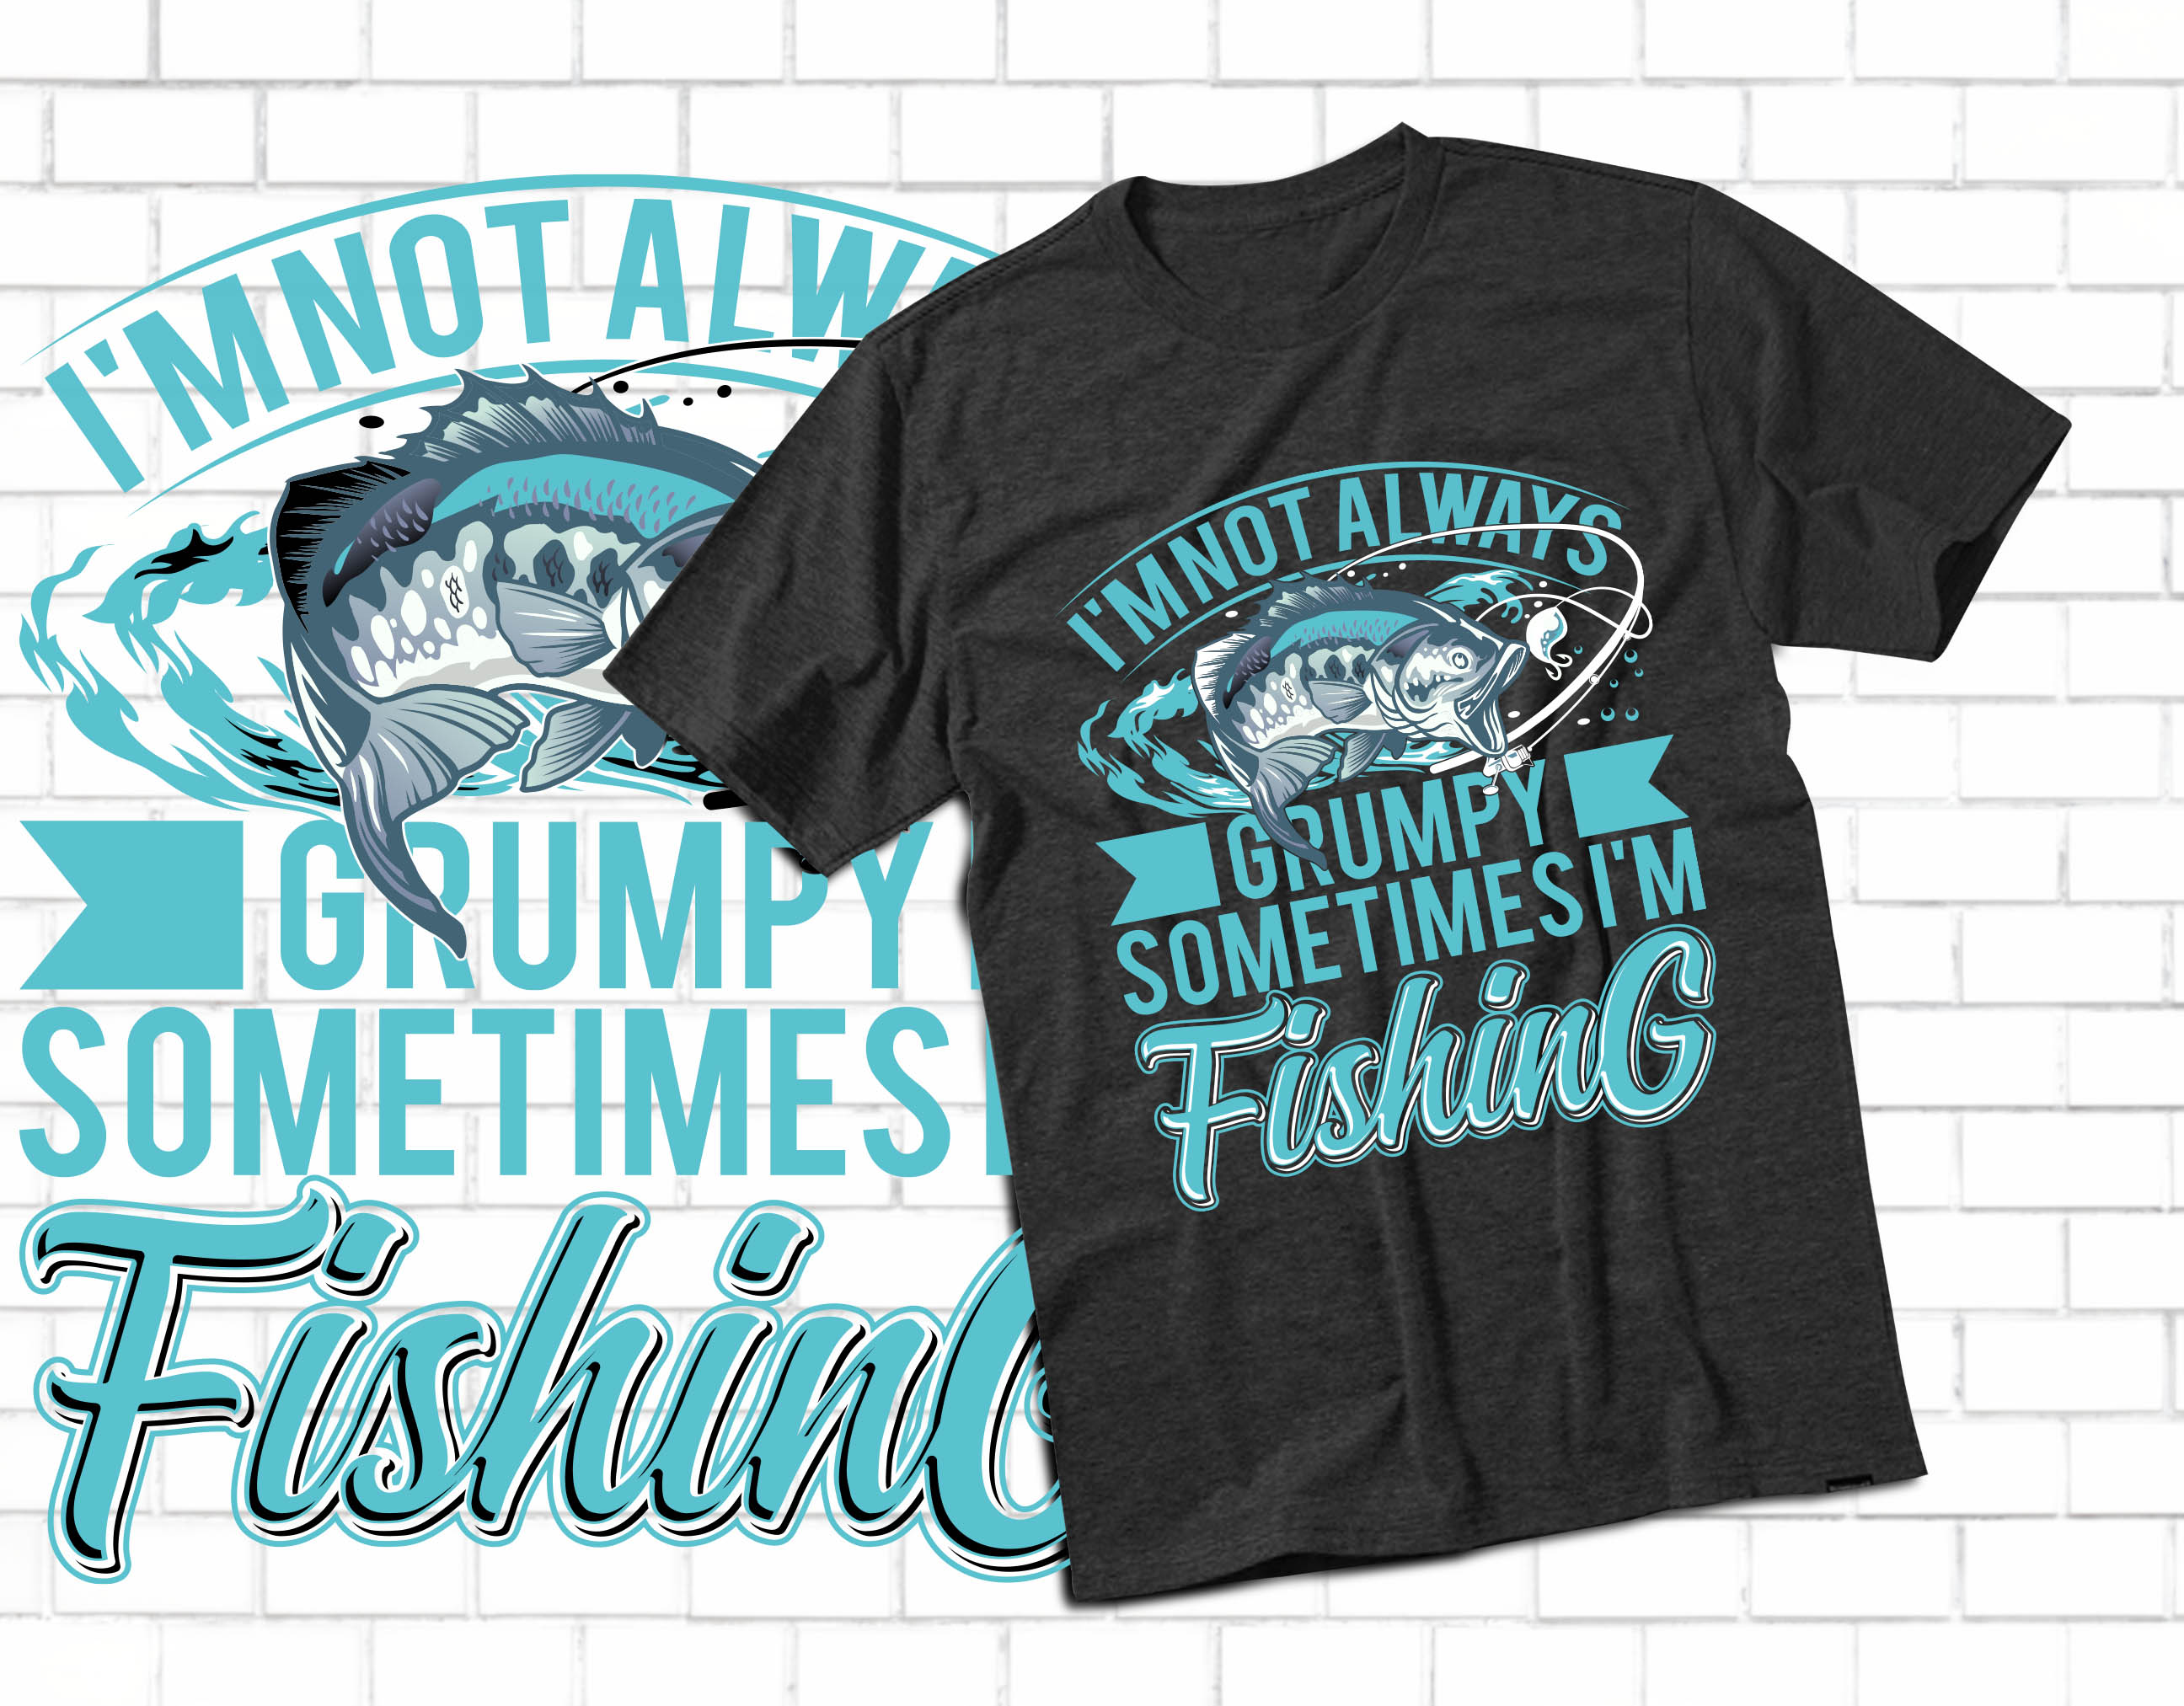 Fishing T-shirt Design, Fishing Shirt Design